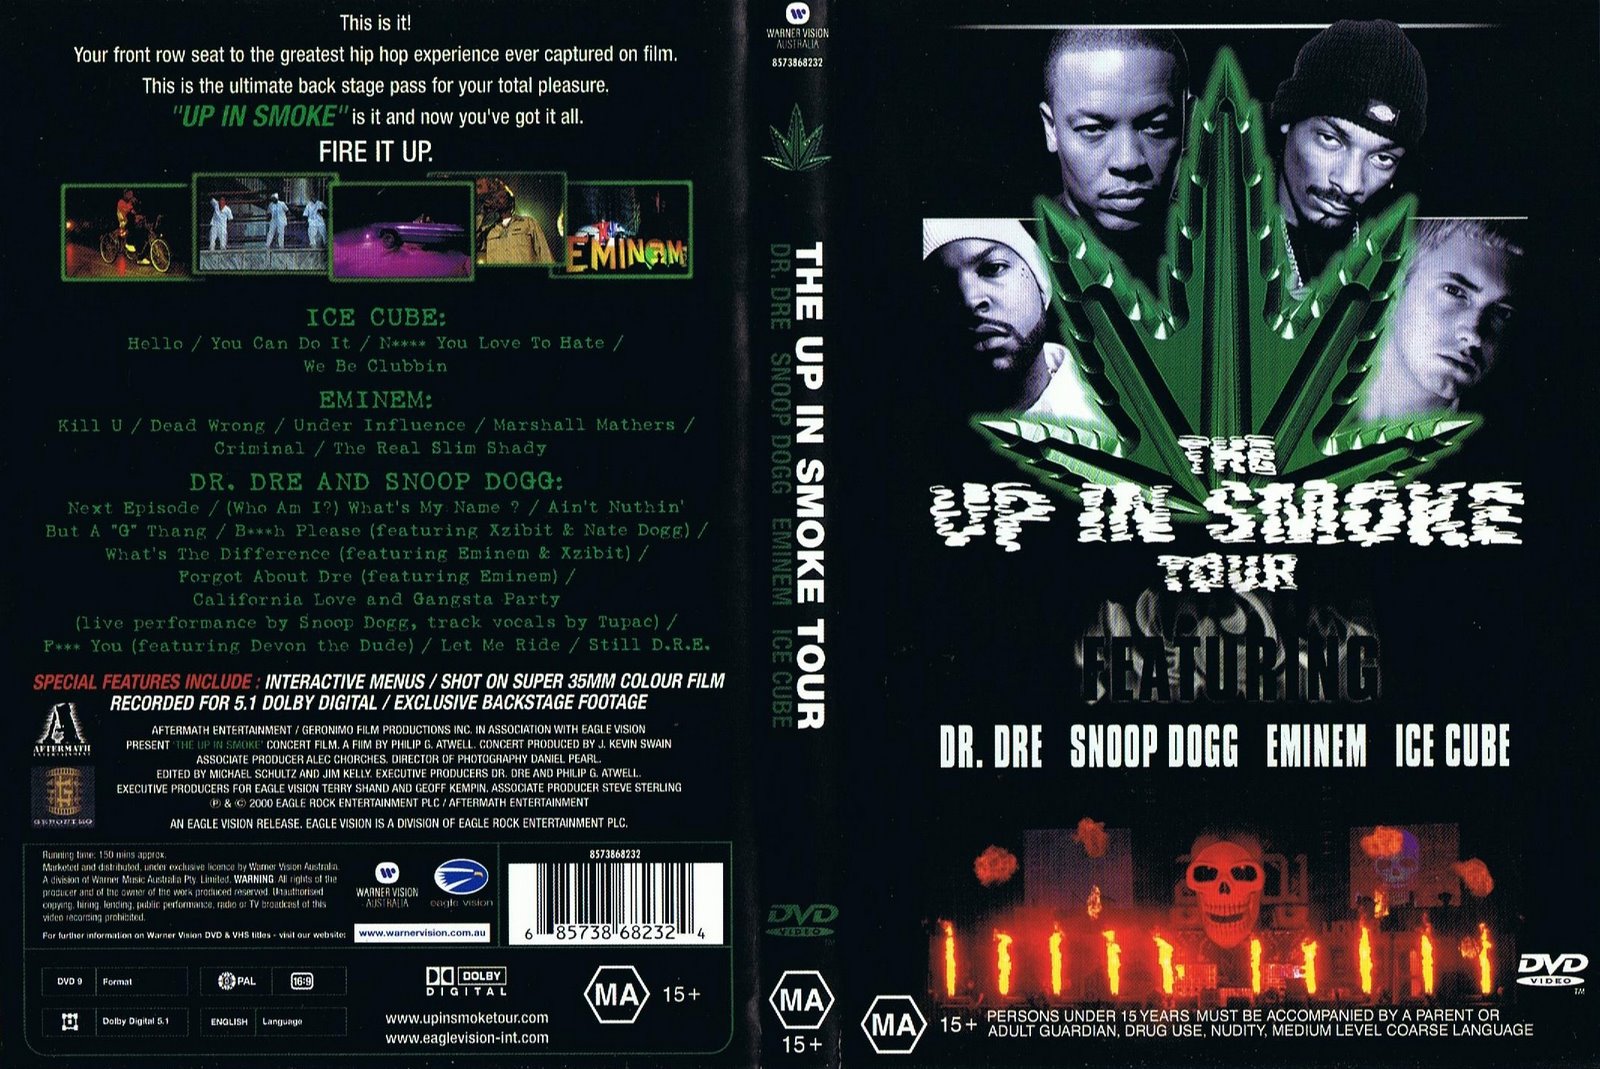 http://1.bp.blogspot.com/-p6JeRt7DLAU/TdtPQtOZG_I/AAAAAAAAAWI/j7c394oWkxk/s1600/Dr+Dre+Up+in+smoke+tour+2000.jpg